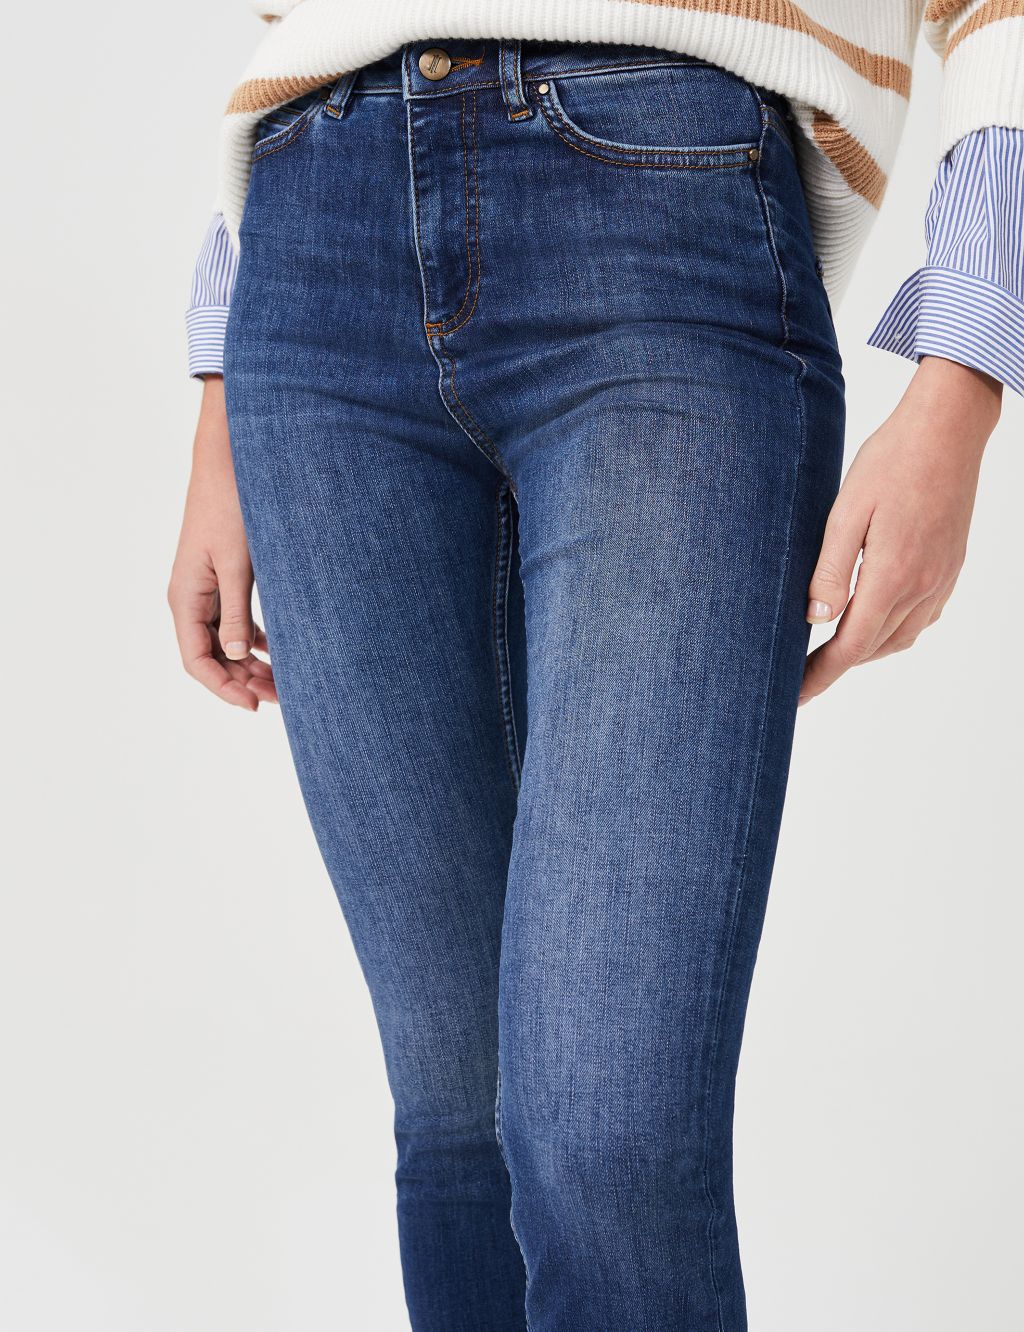 Skinny Jeans image 2